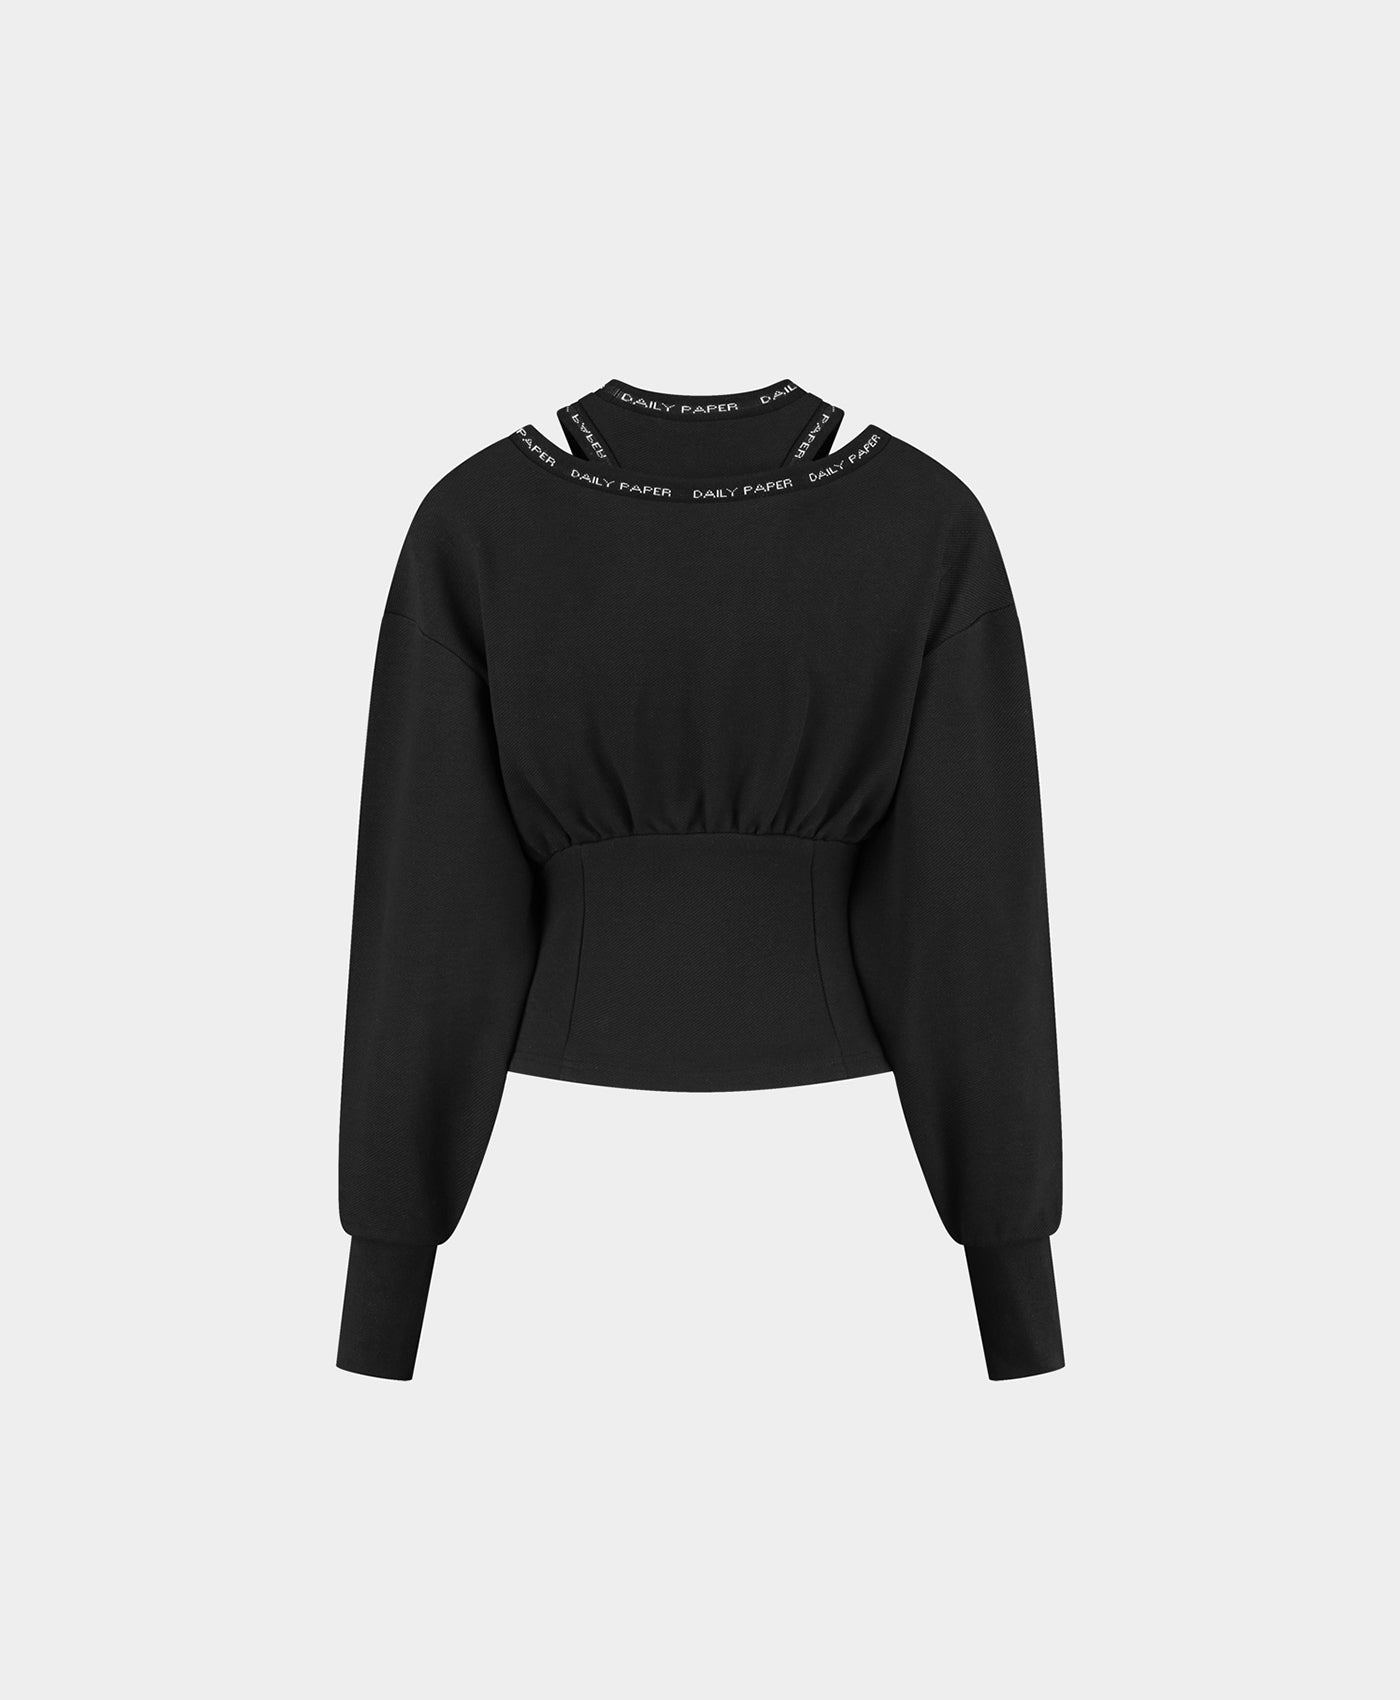 DP - Black Pazima Sweater - Packshot - Rear